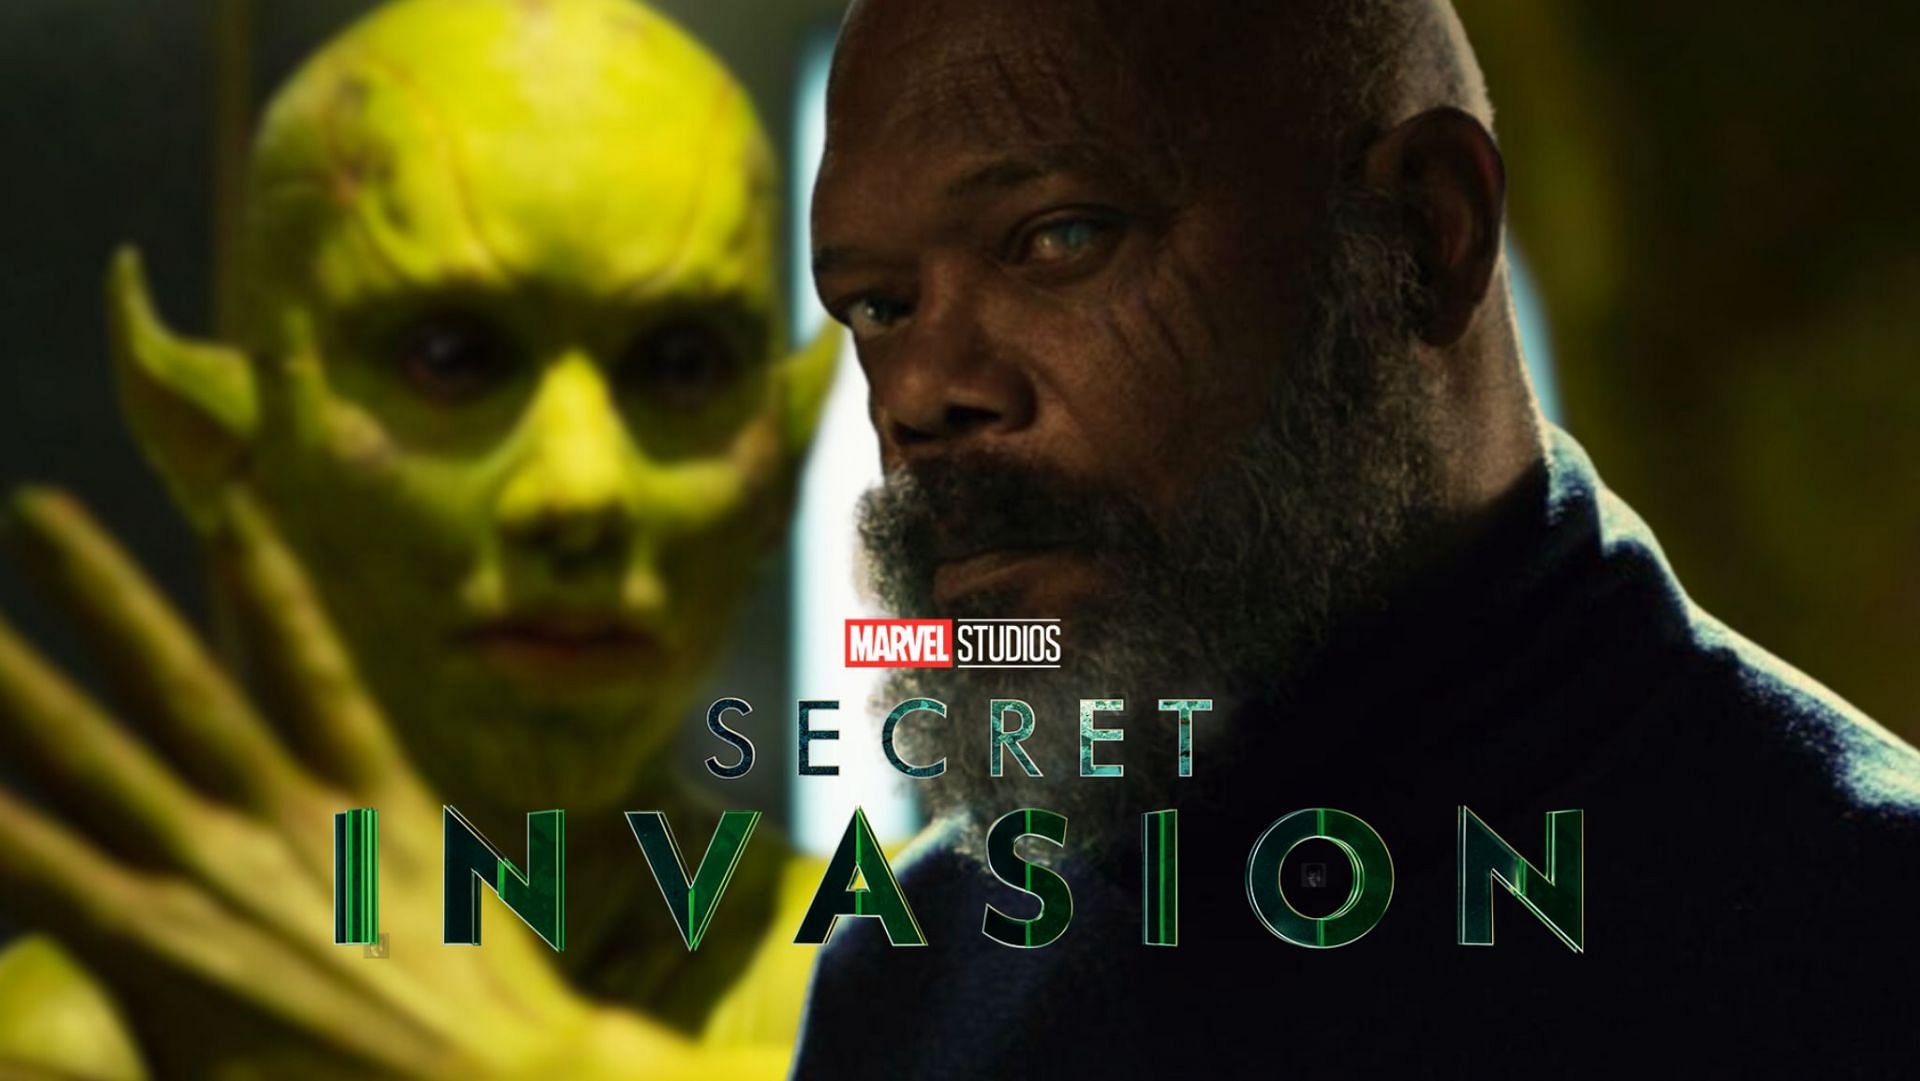 The Secret Invasion - Rotten Tomatoes